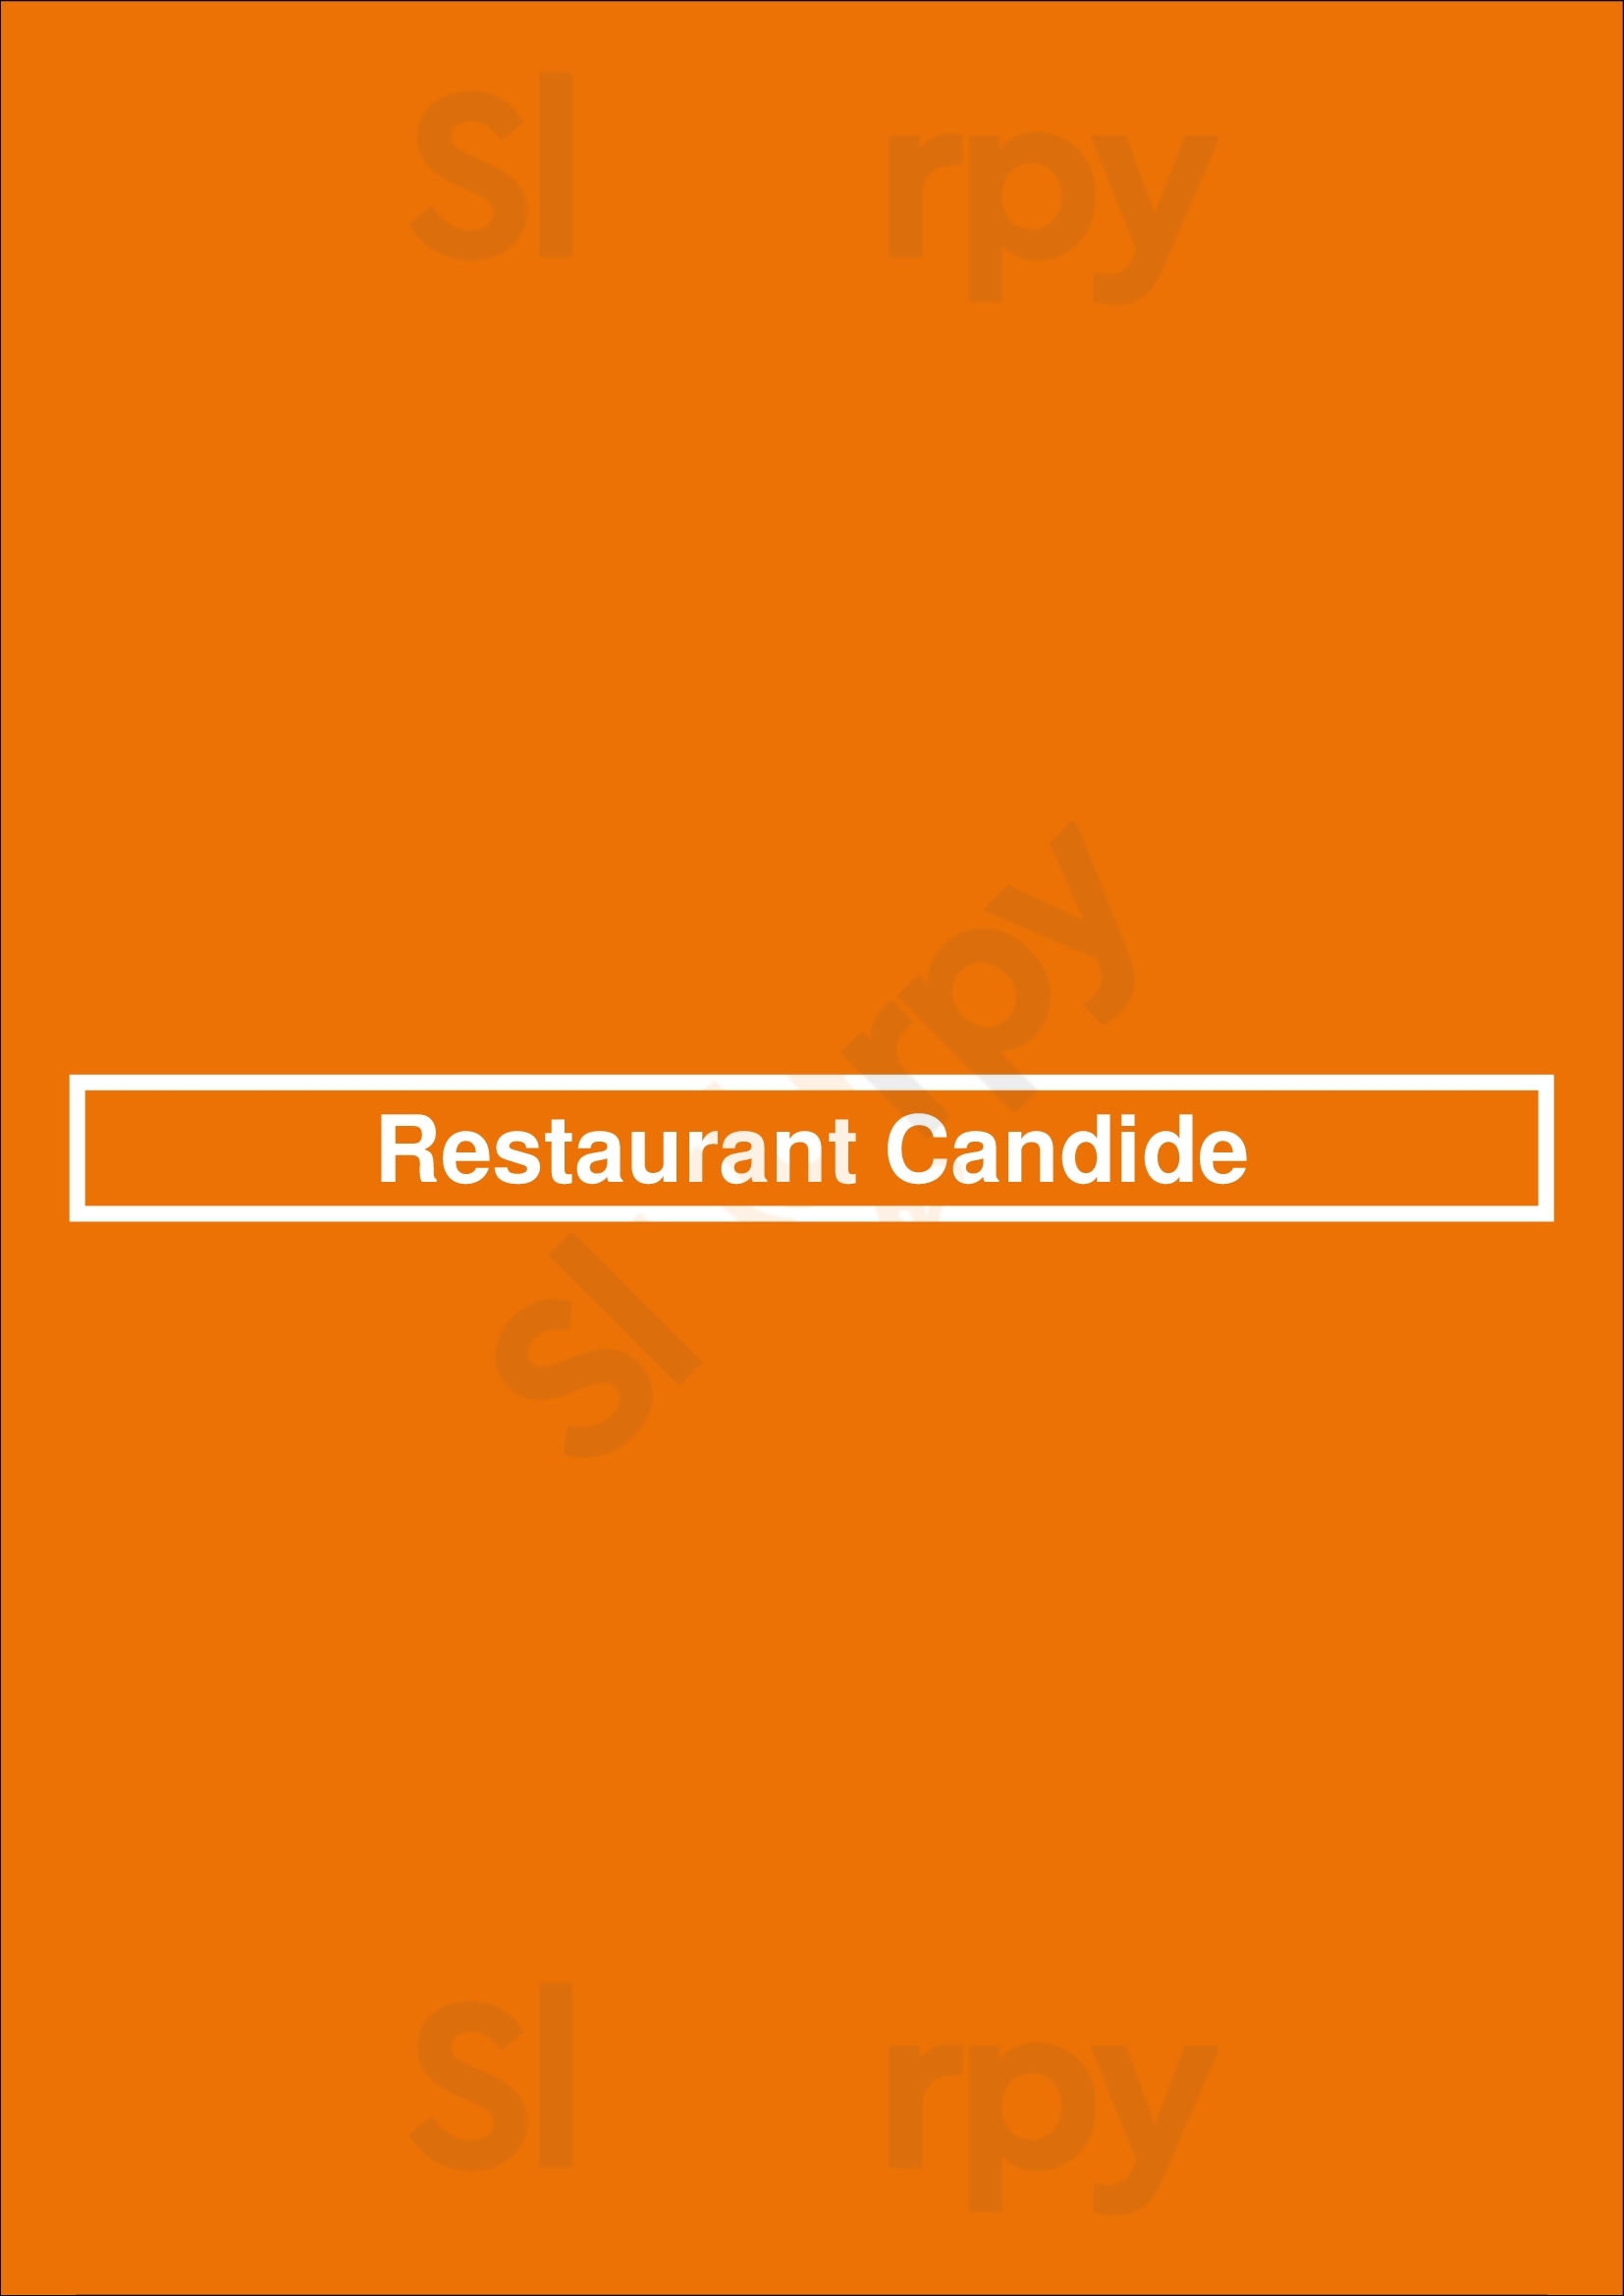 Restaurant Candide Montreal Menu - 1